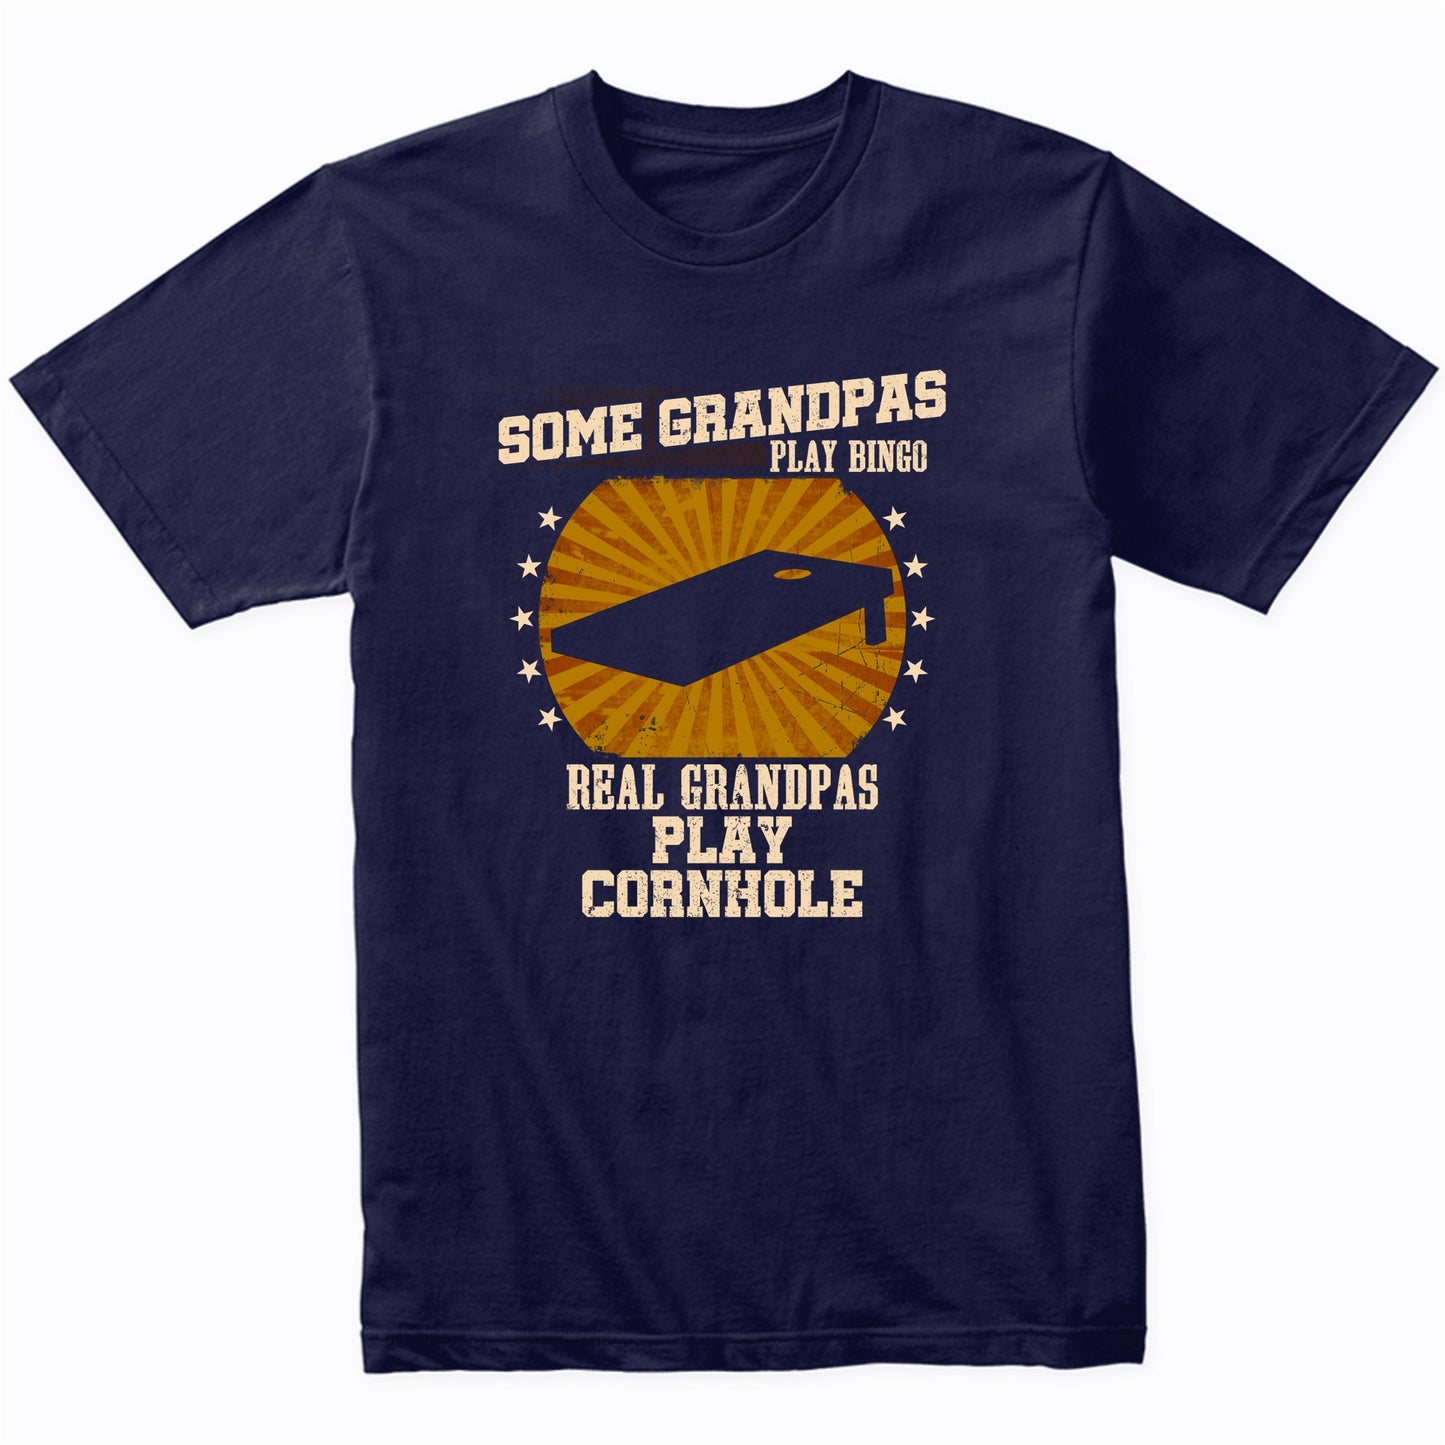 Cornhole Grandpa Shirt - Real Grandpas Play Cornhole T-Shirt